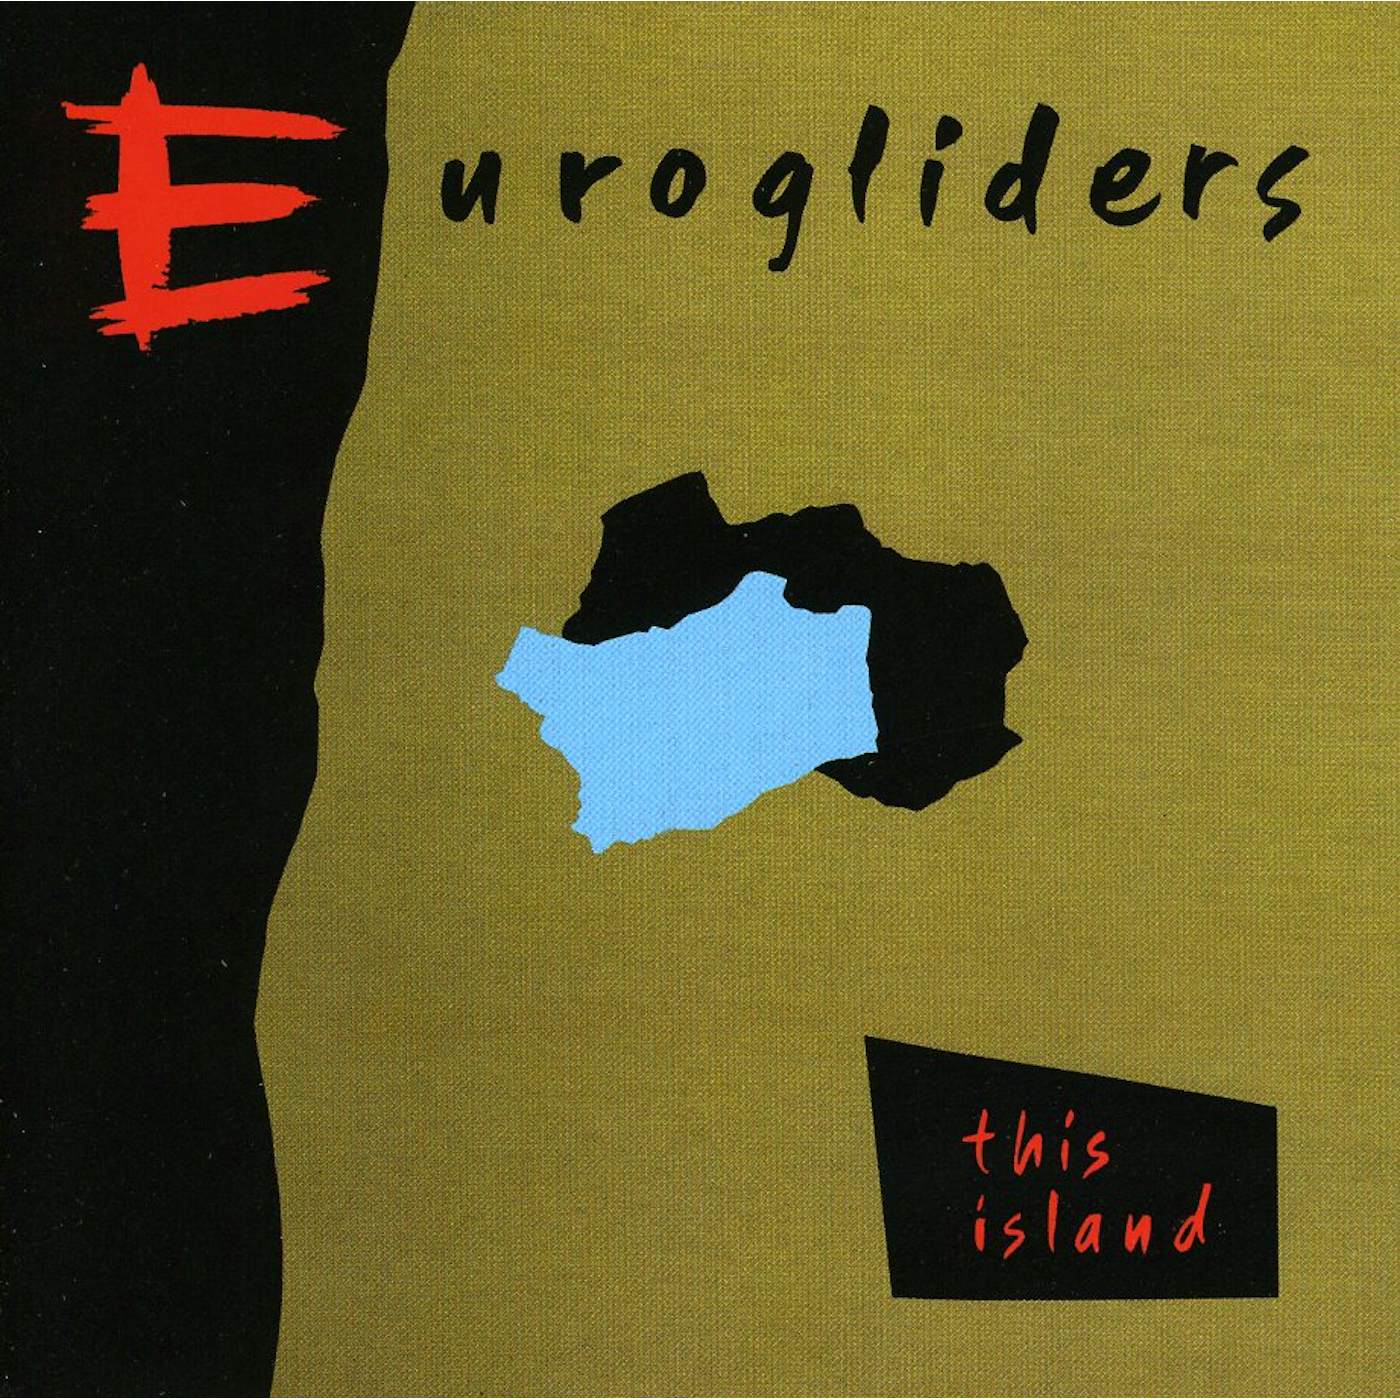 Eurogliders THIS ISLAND CD